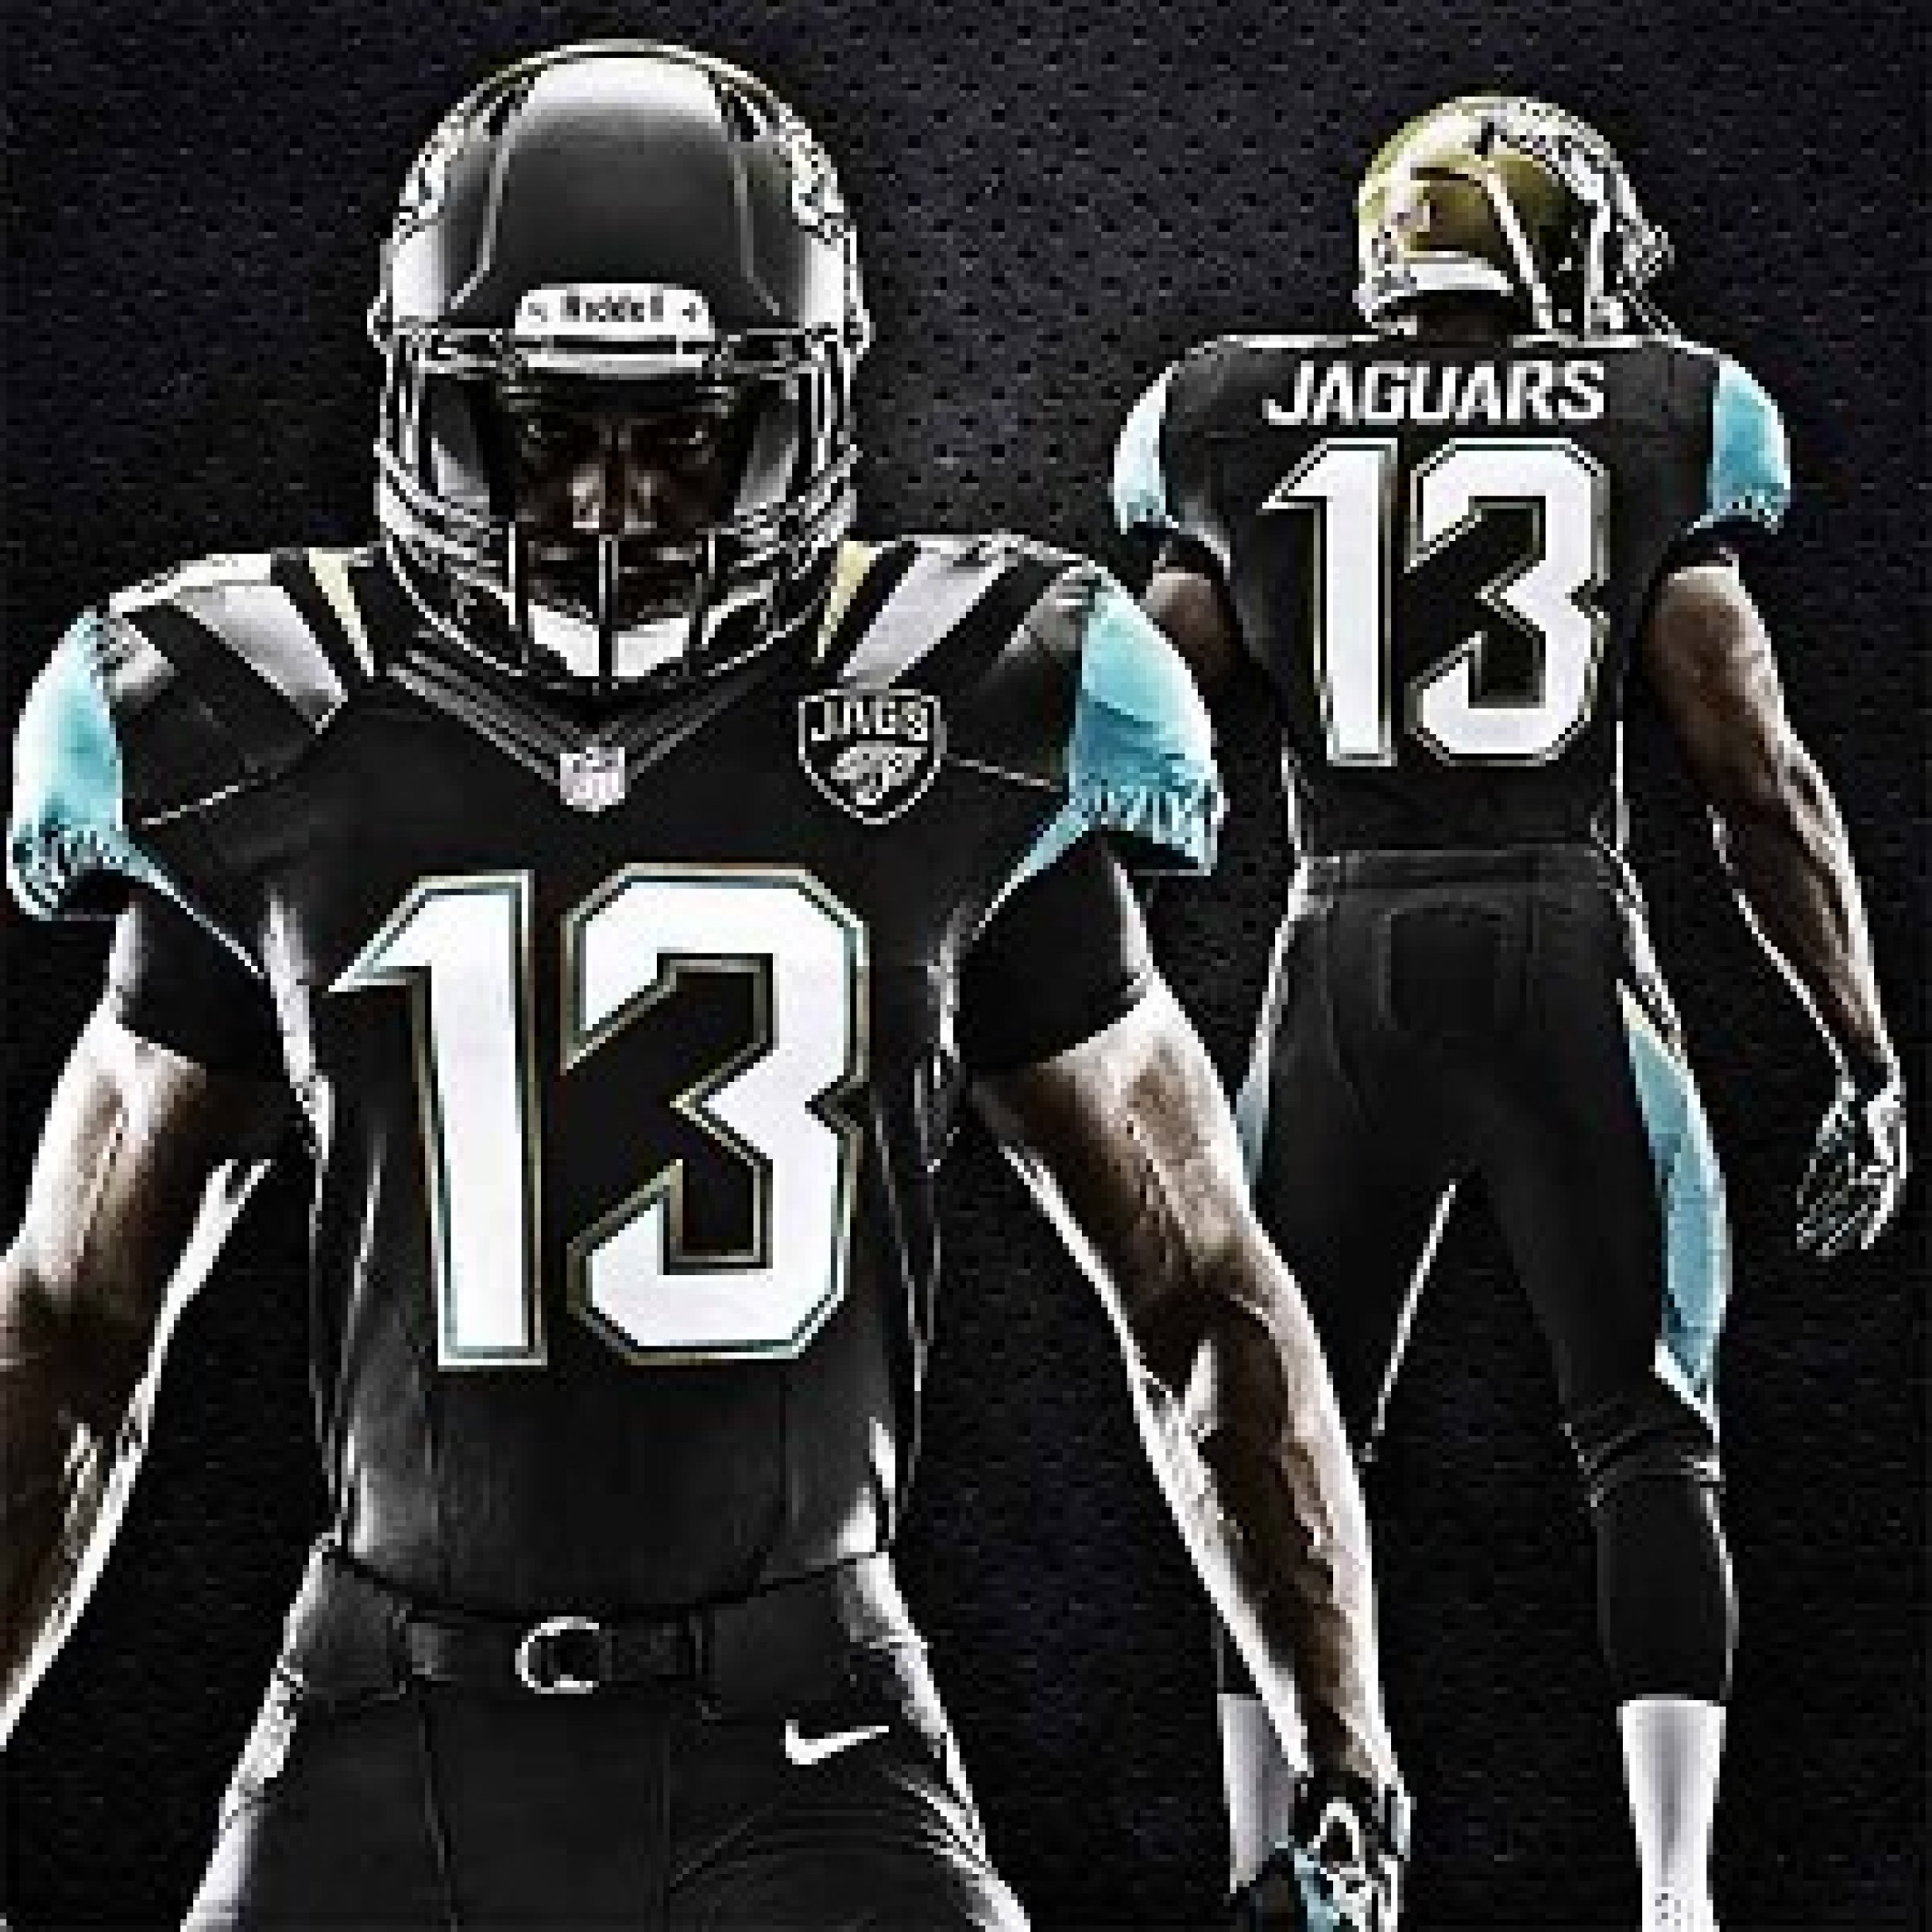 Jacksonville Jaguars Uniforms New Jerseys And Logo Revealed For NFL Team [PICTURES] IBTimes